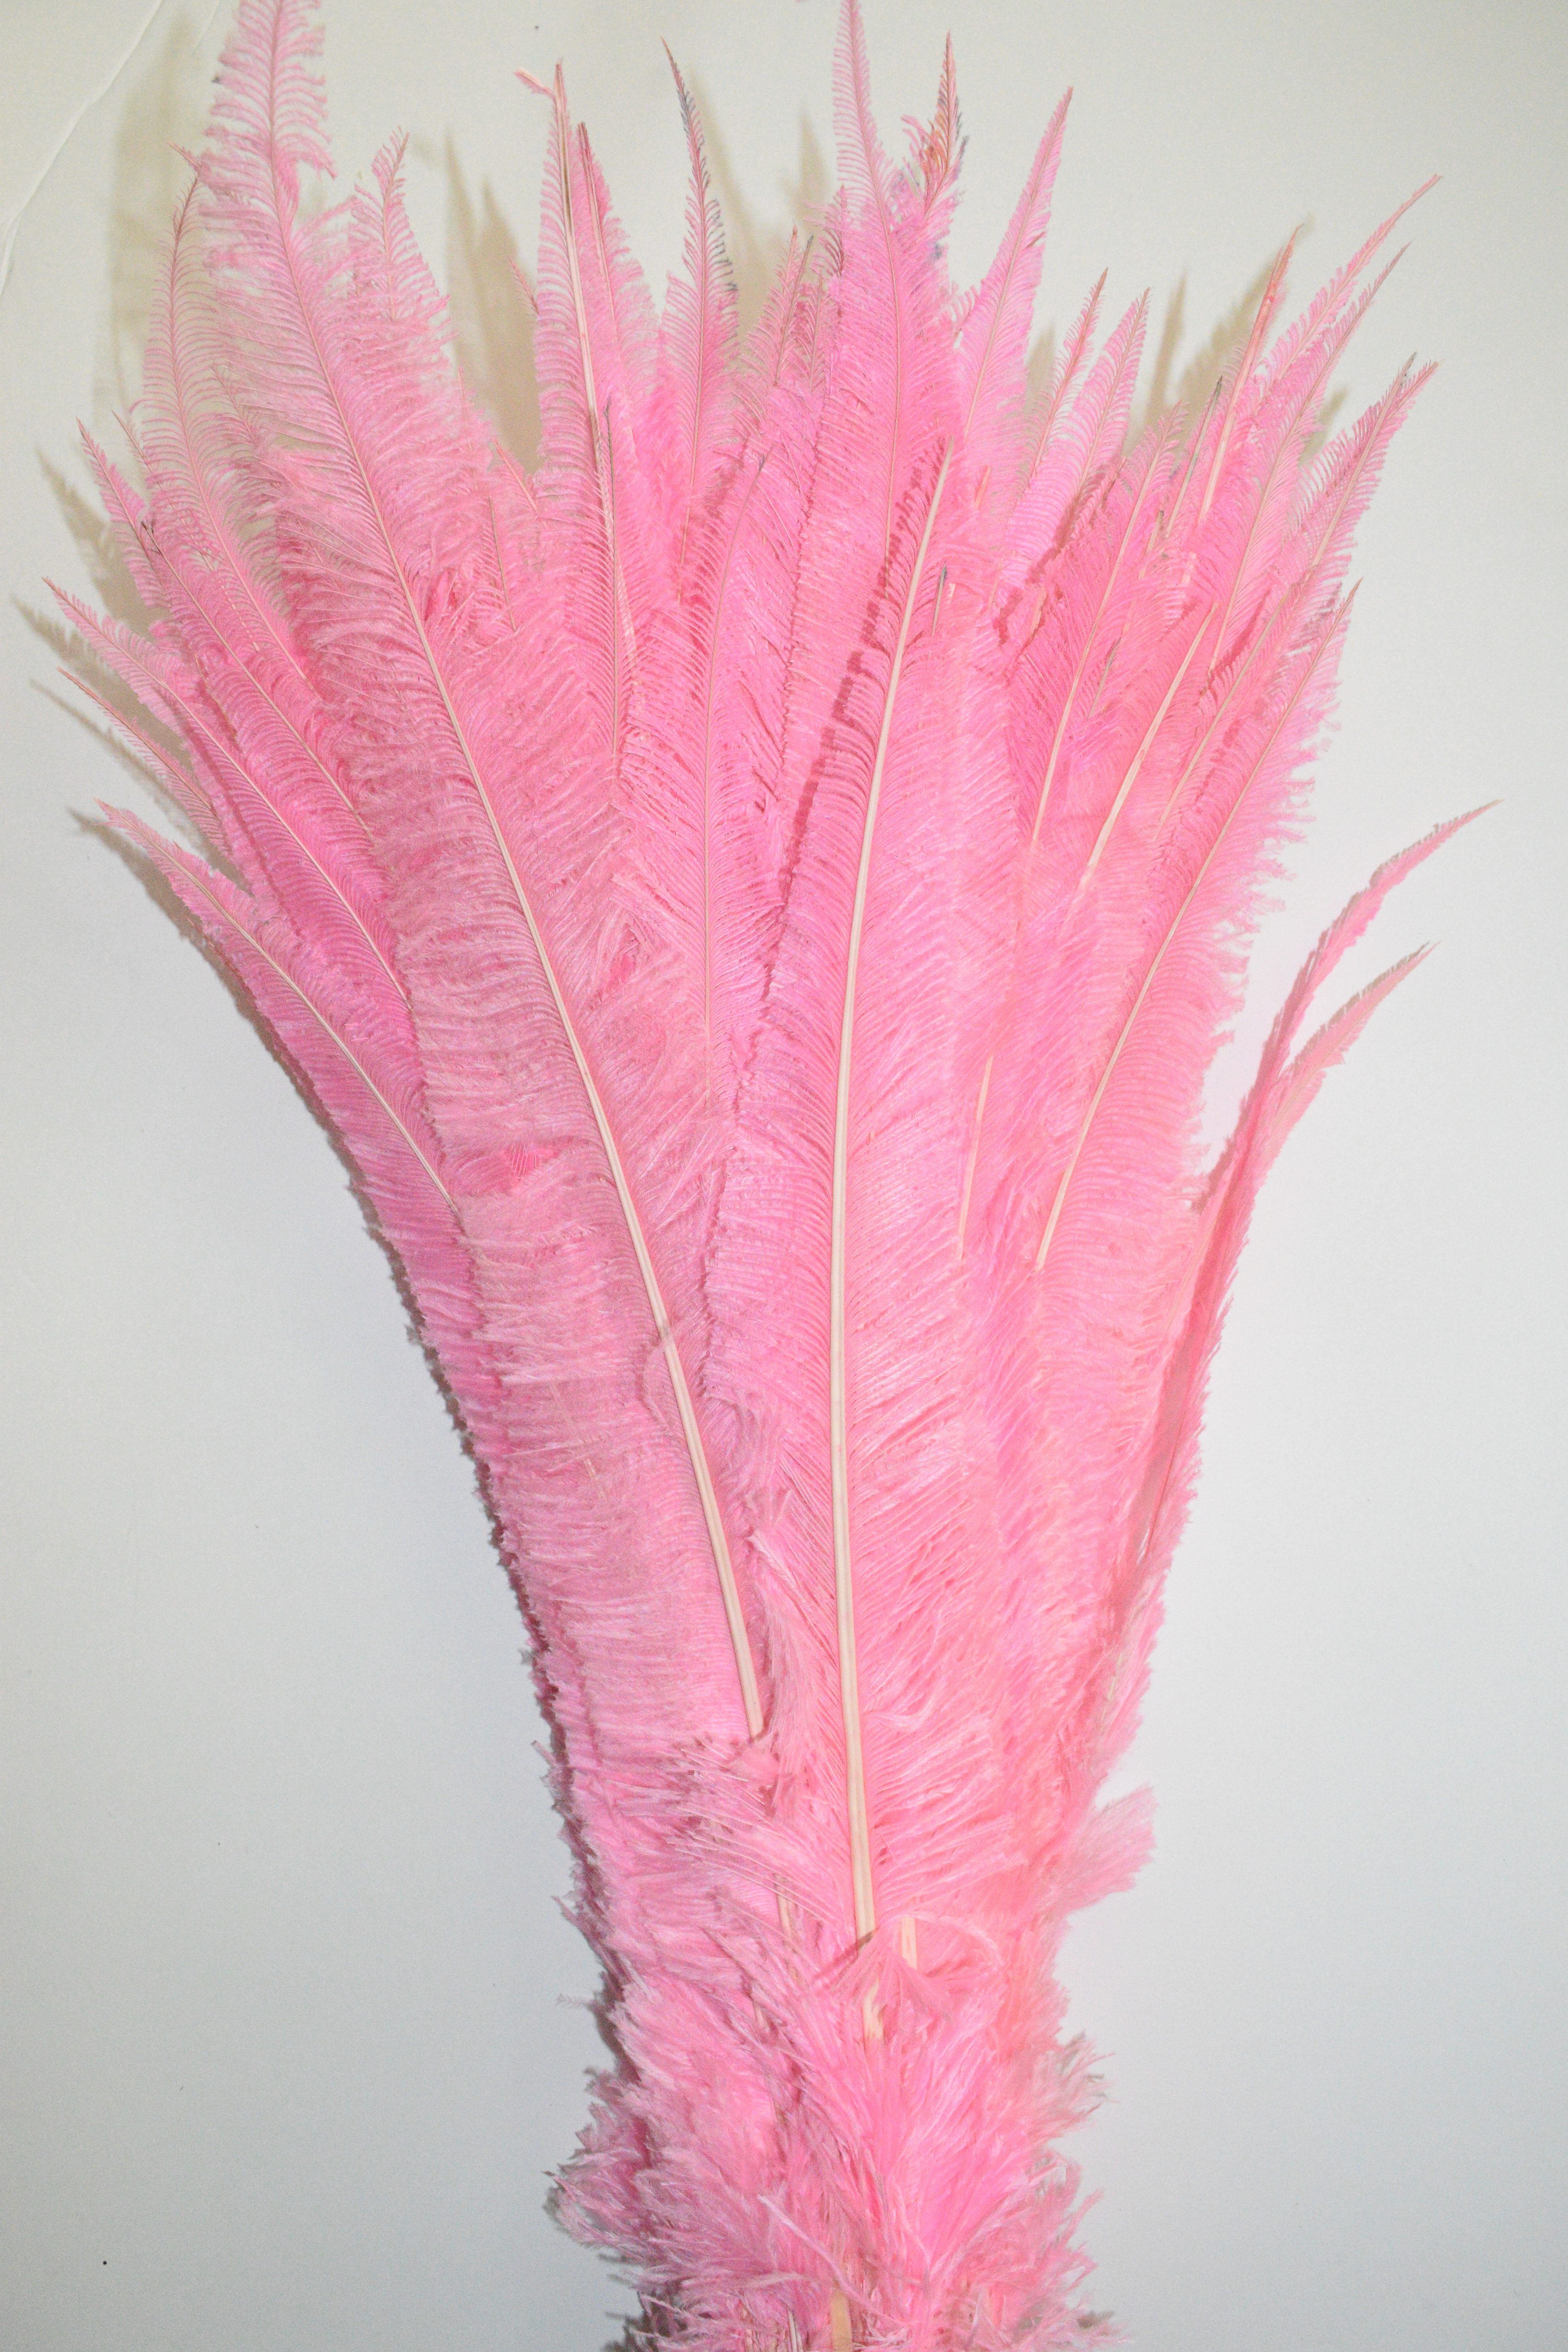 Nandu Ostrich Feathers 18 inch - Light Pink - Shi'dor